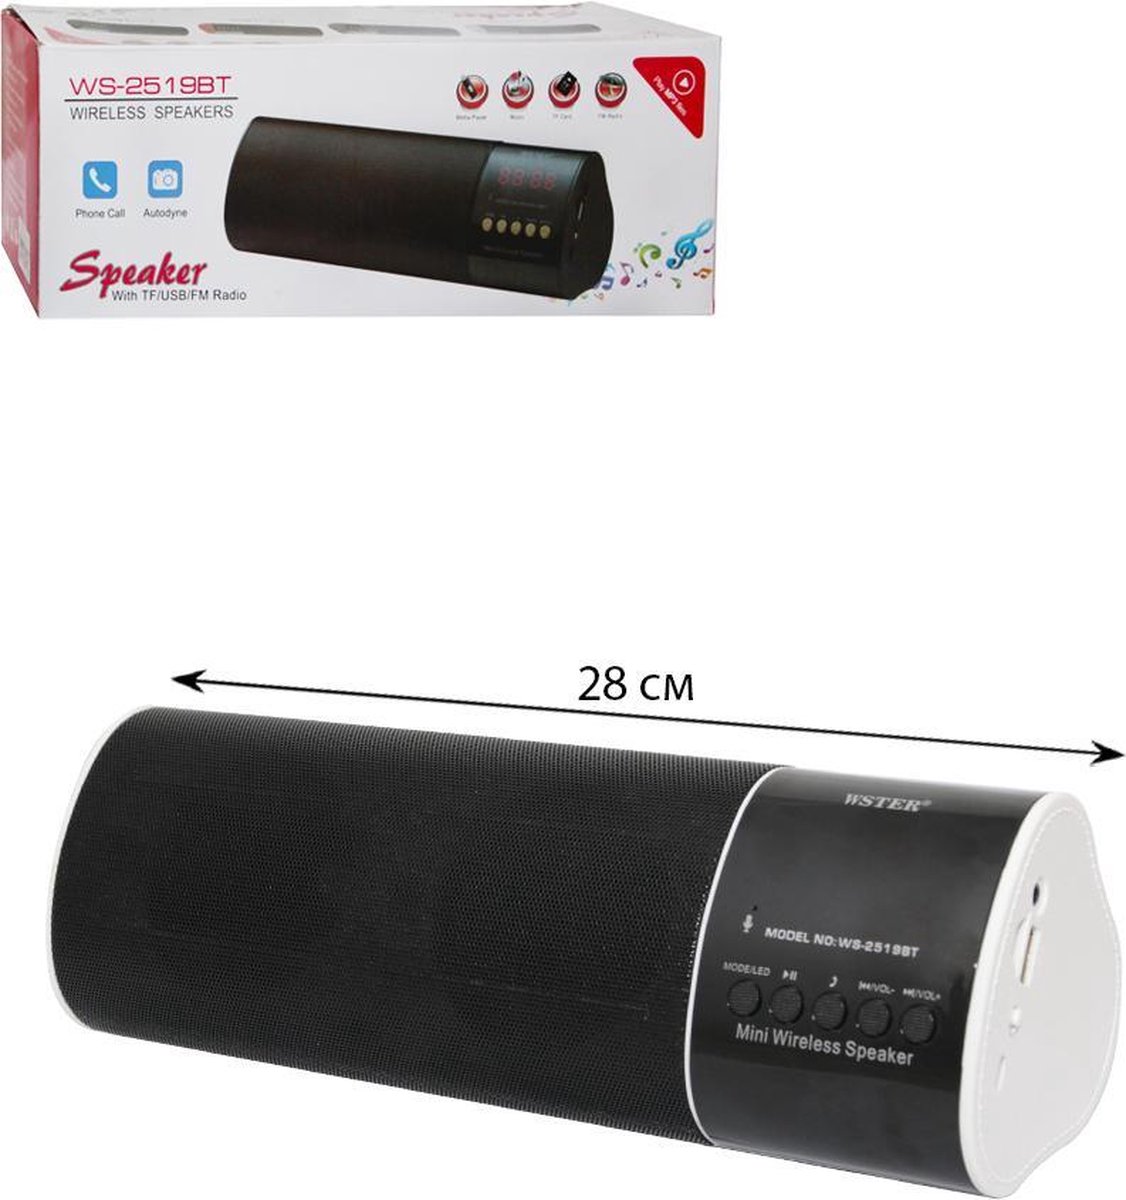 Speaker draadloos WS-2519bt met TF/USB/FM RADIO